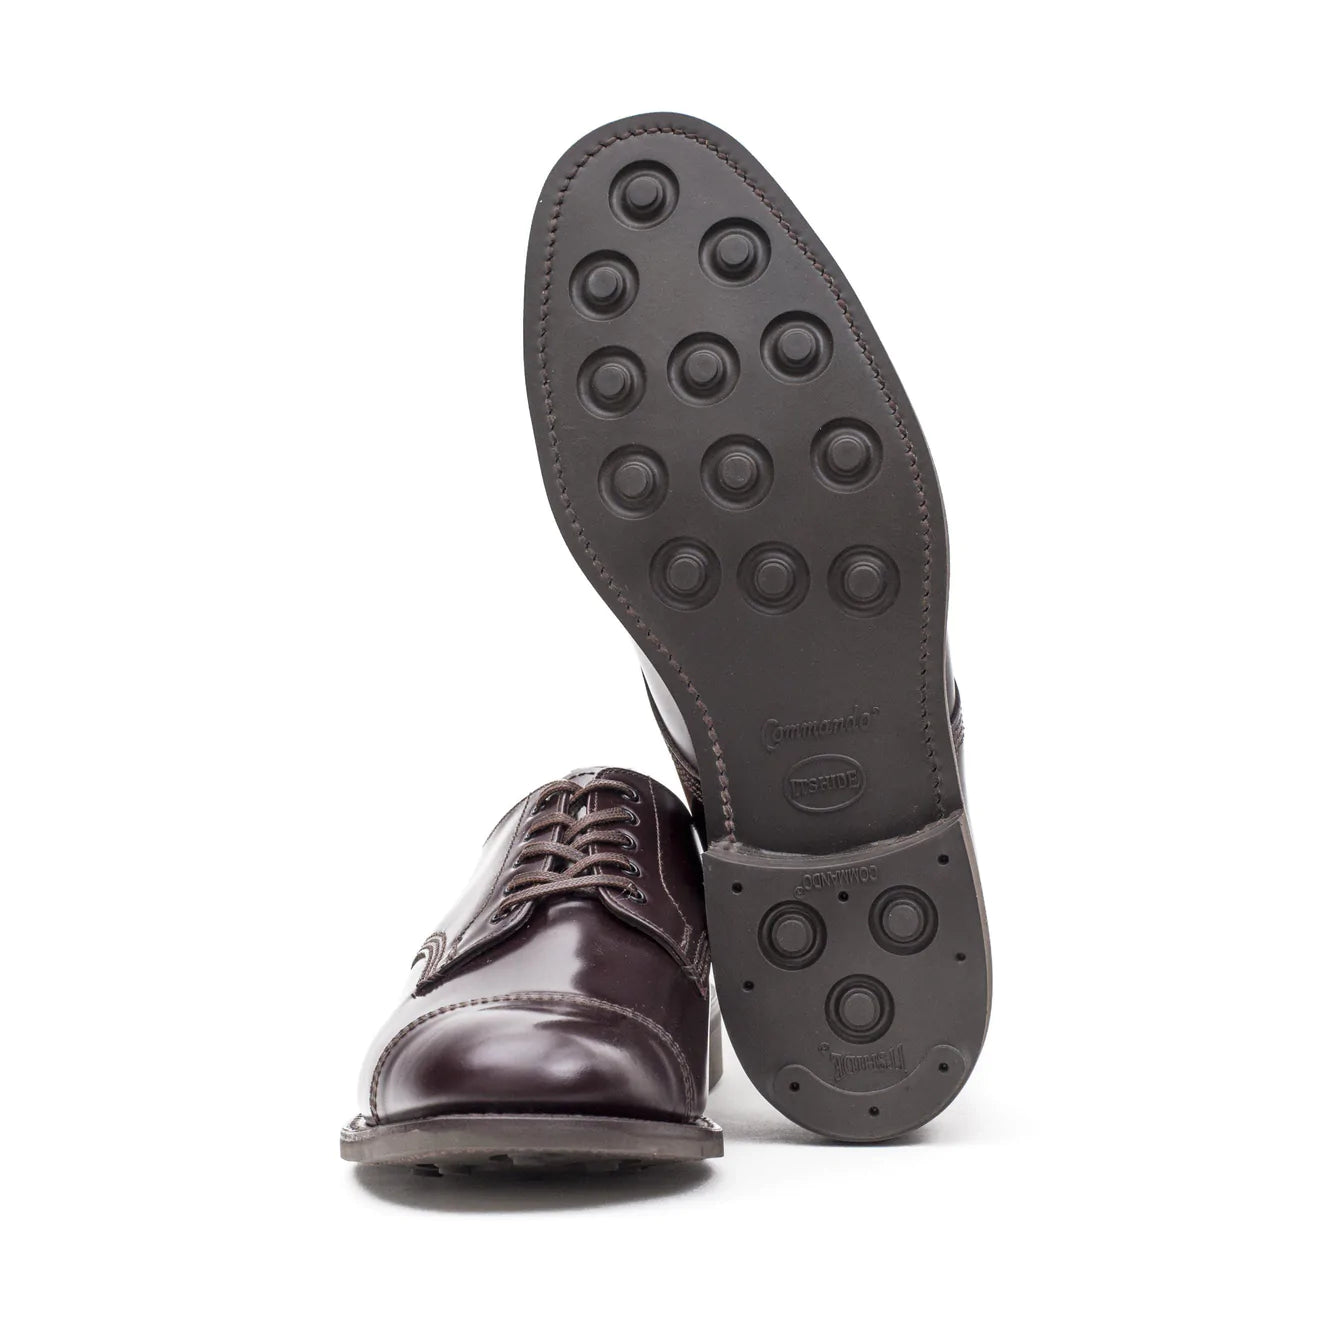 1128R Military Derby Shoe - Burgundy Leather